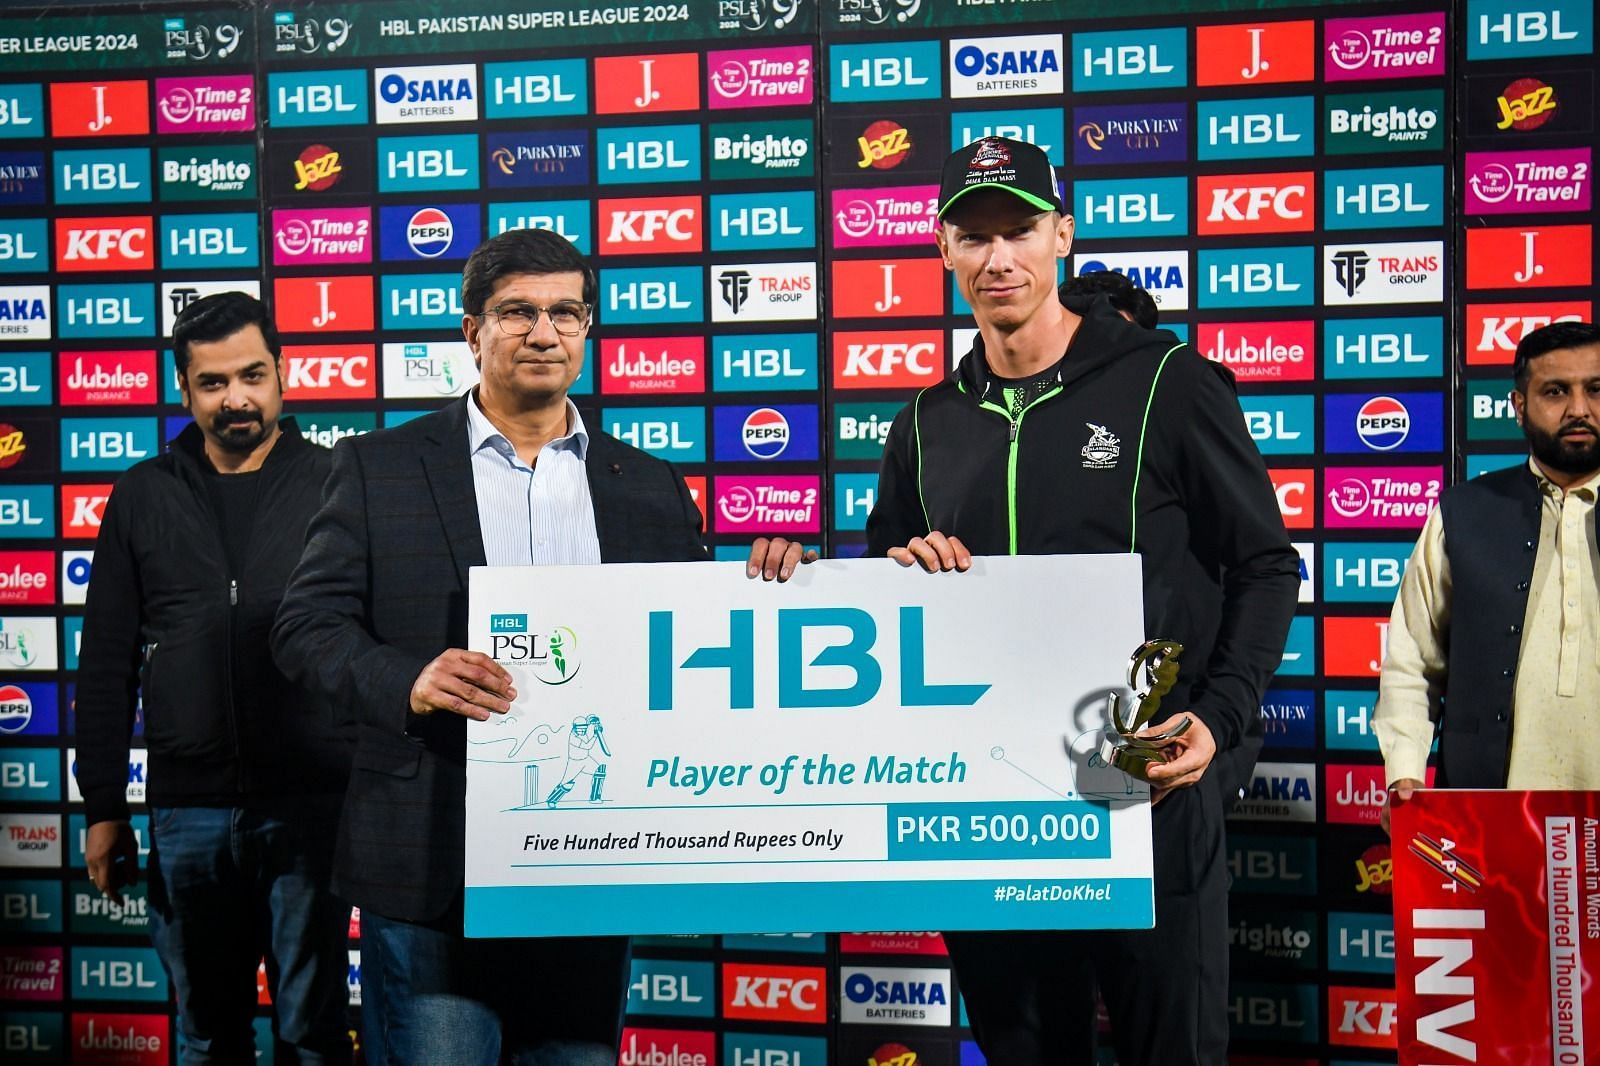 Rassie van der Dussen receiving an award (Image Courtesy: X/Pakistan Super League)